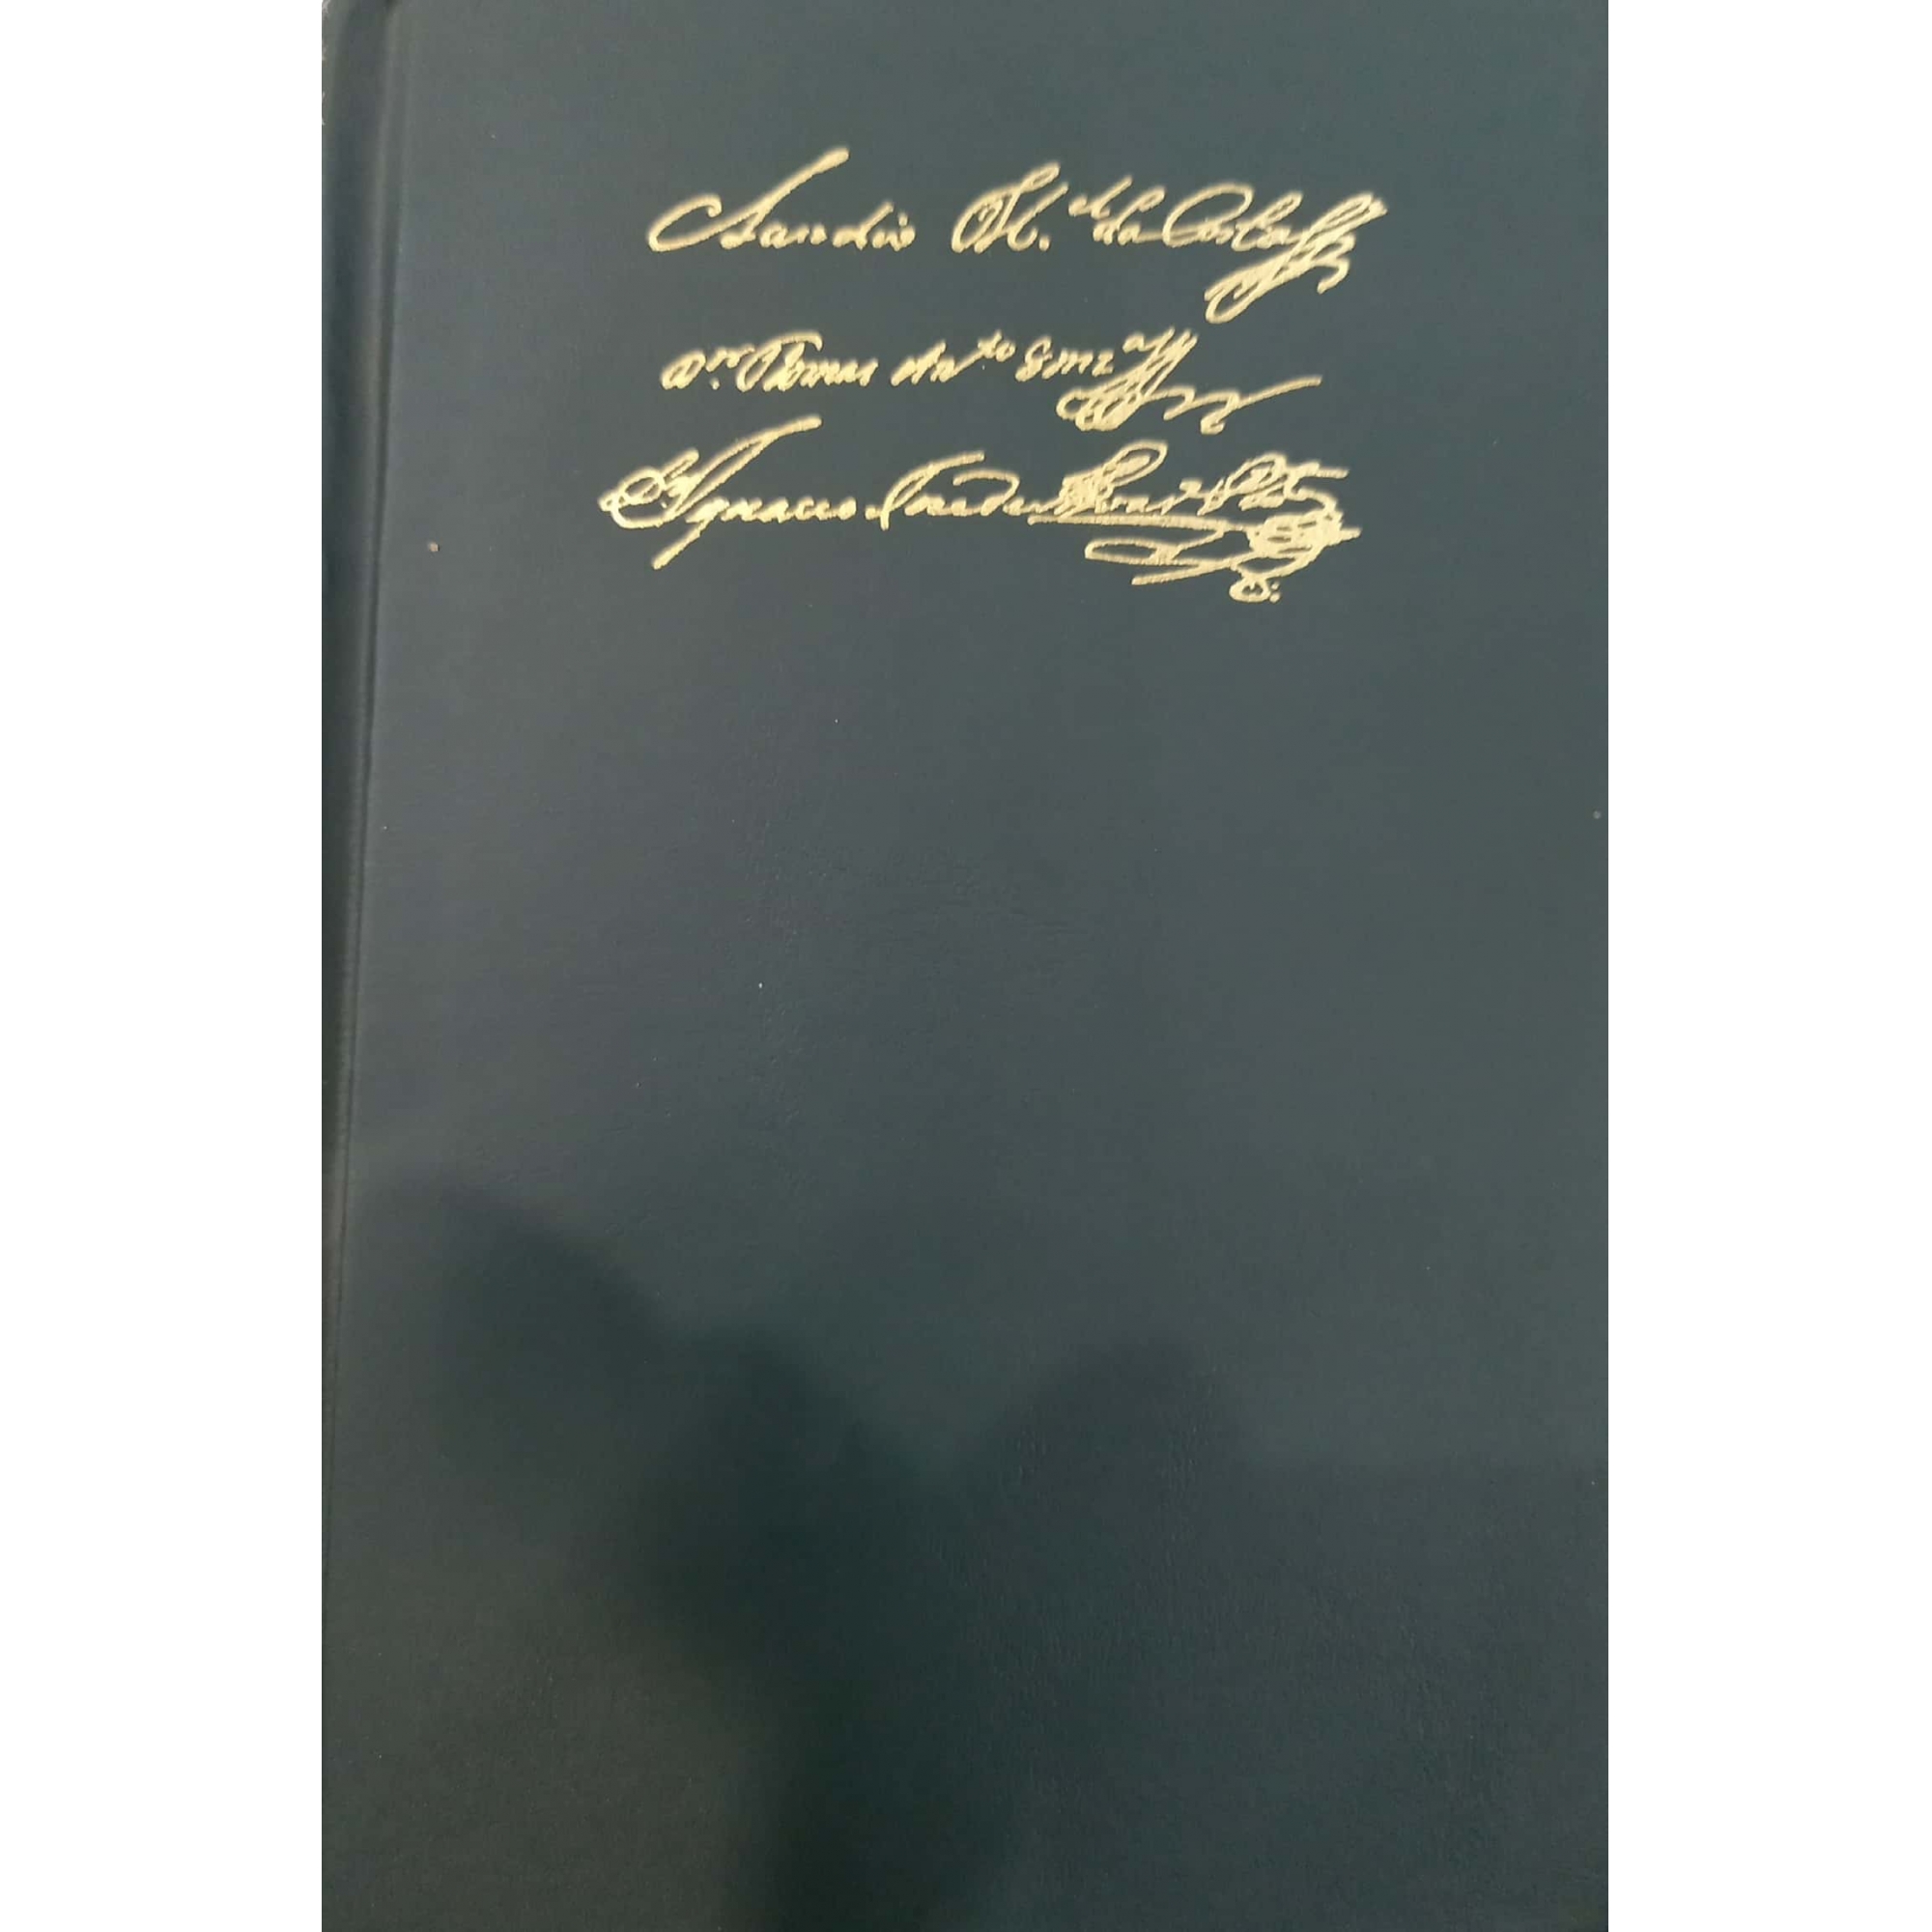 A poesia dos inconfidentes: Poesia completa de Cláudio Manuel da Costa, Tomás Antônio Gonzaga e Alvarenga Peixoto